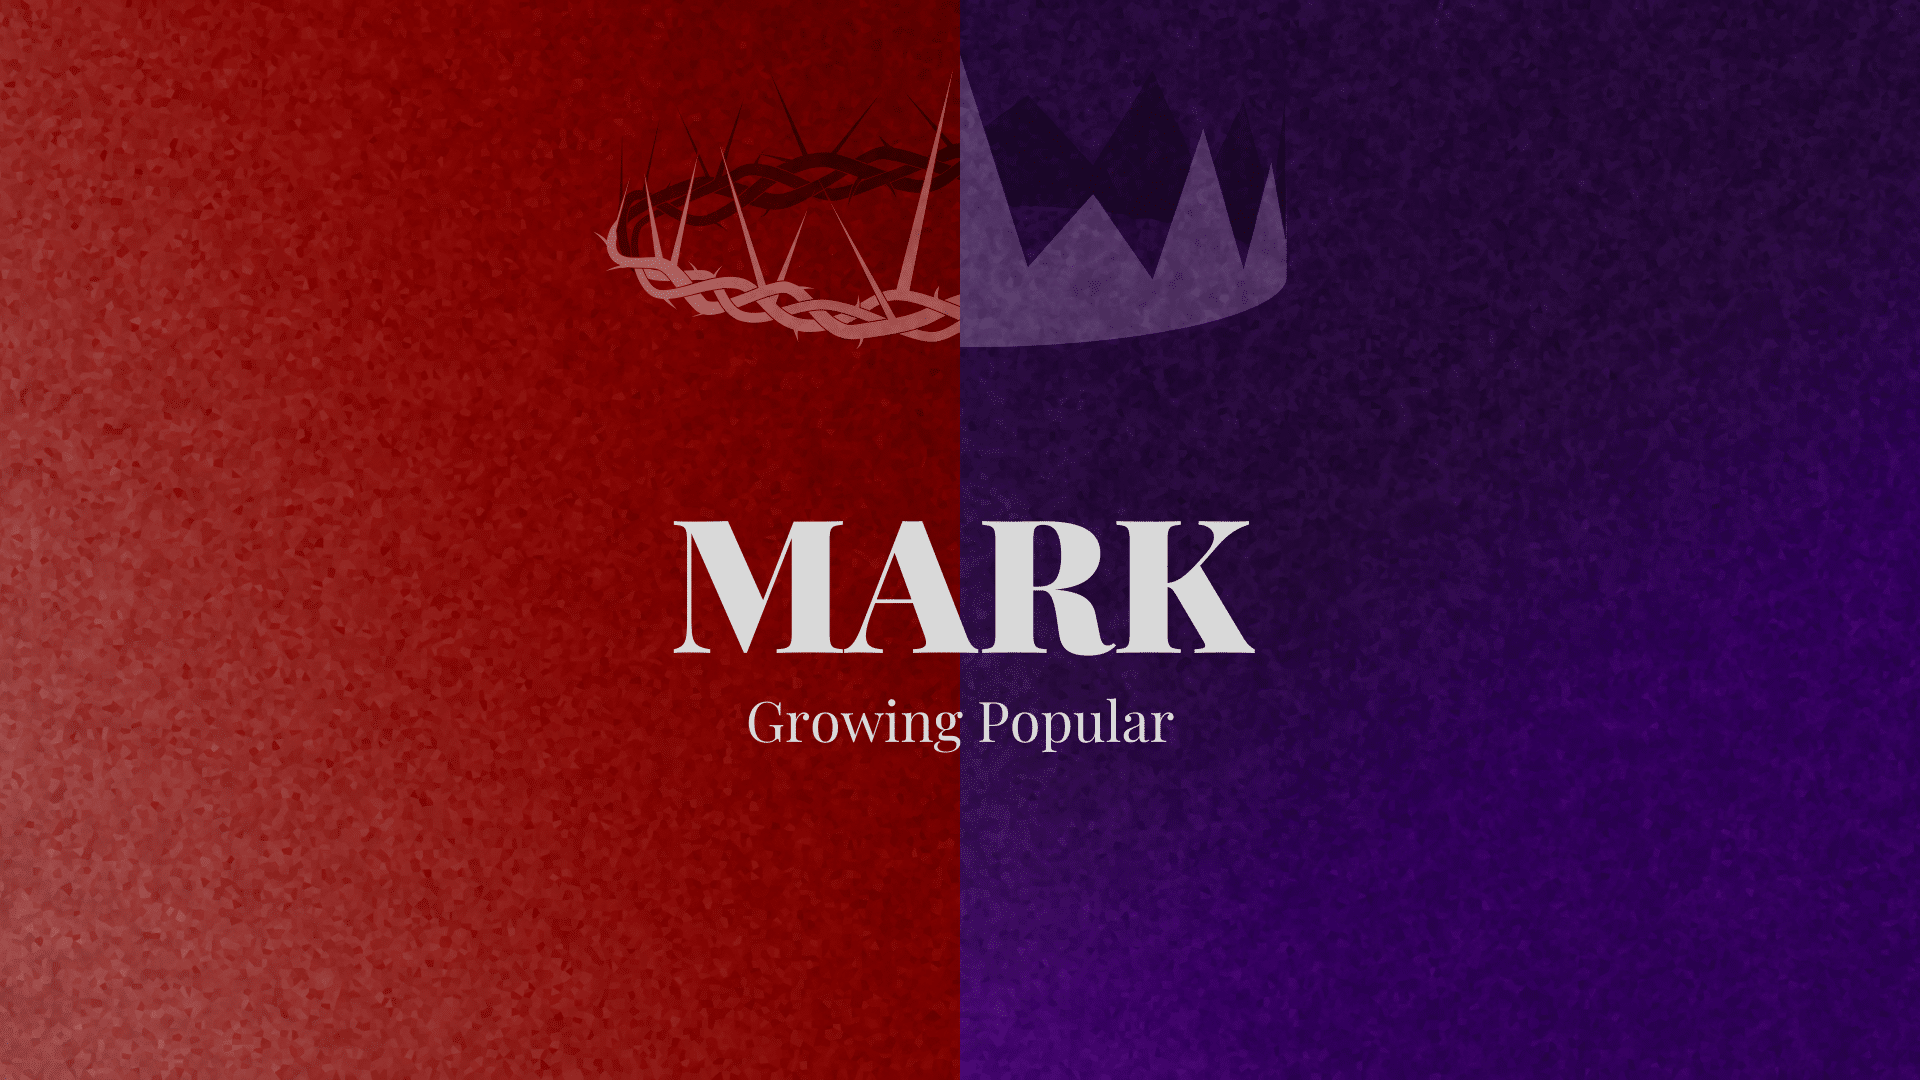 Mark: Growing Popular